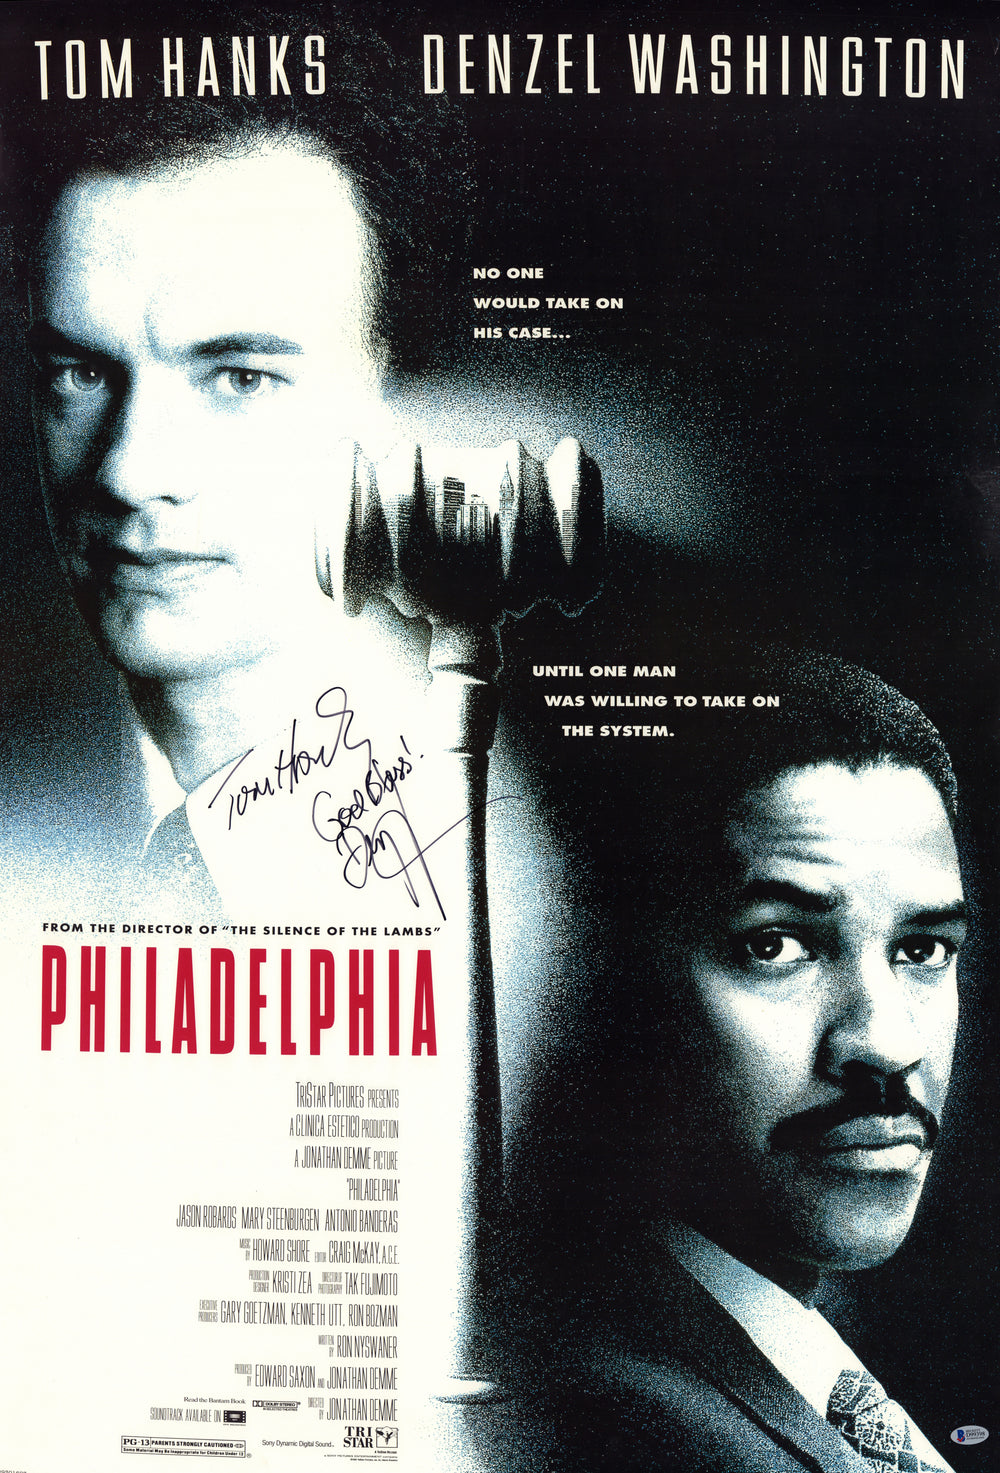 Tom Hanks and Denzel Washington in Philadelphia Signed 27x40 Poster